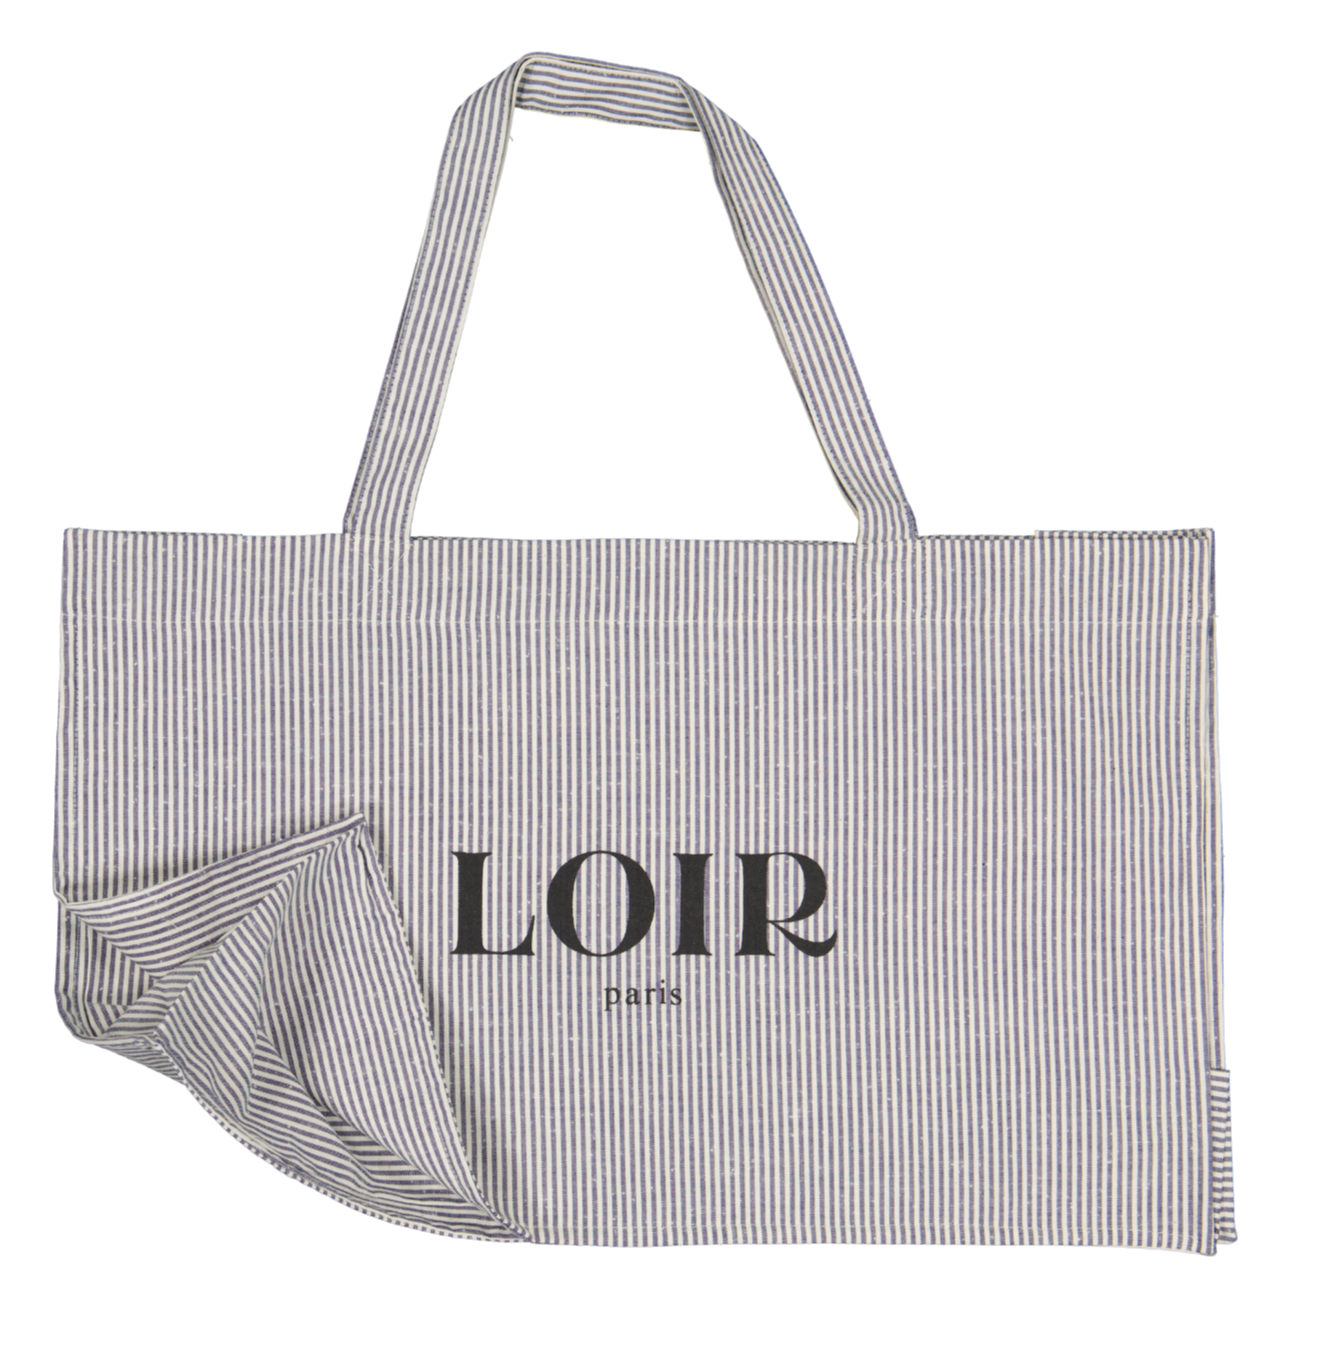 The LOIR Paris tote bag